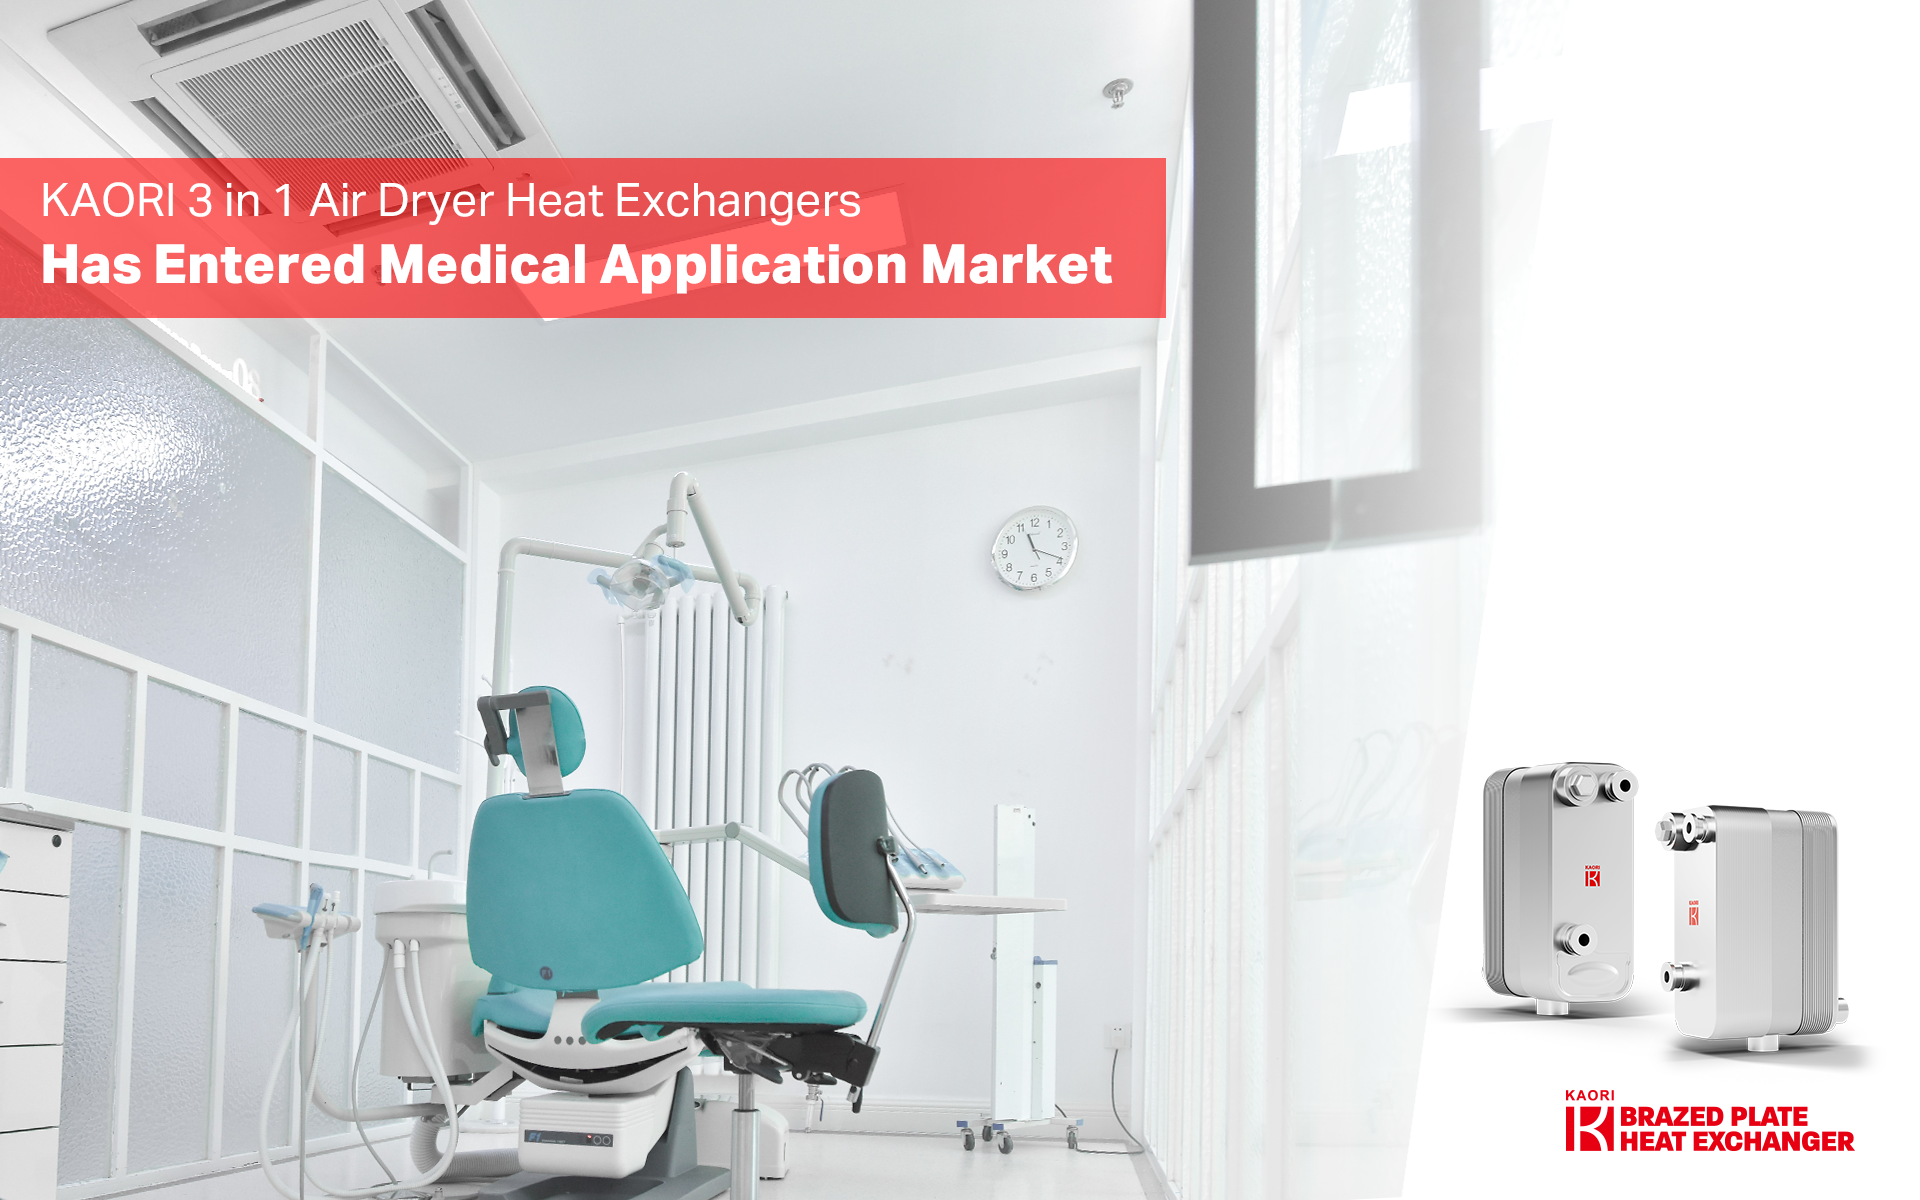  KAORI 3 in 1 Air Dryer Heat Exchanger has entered medical application market 